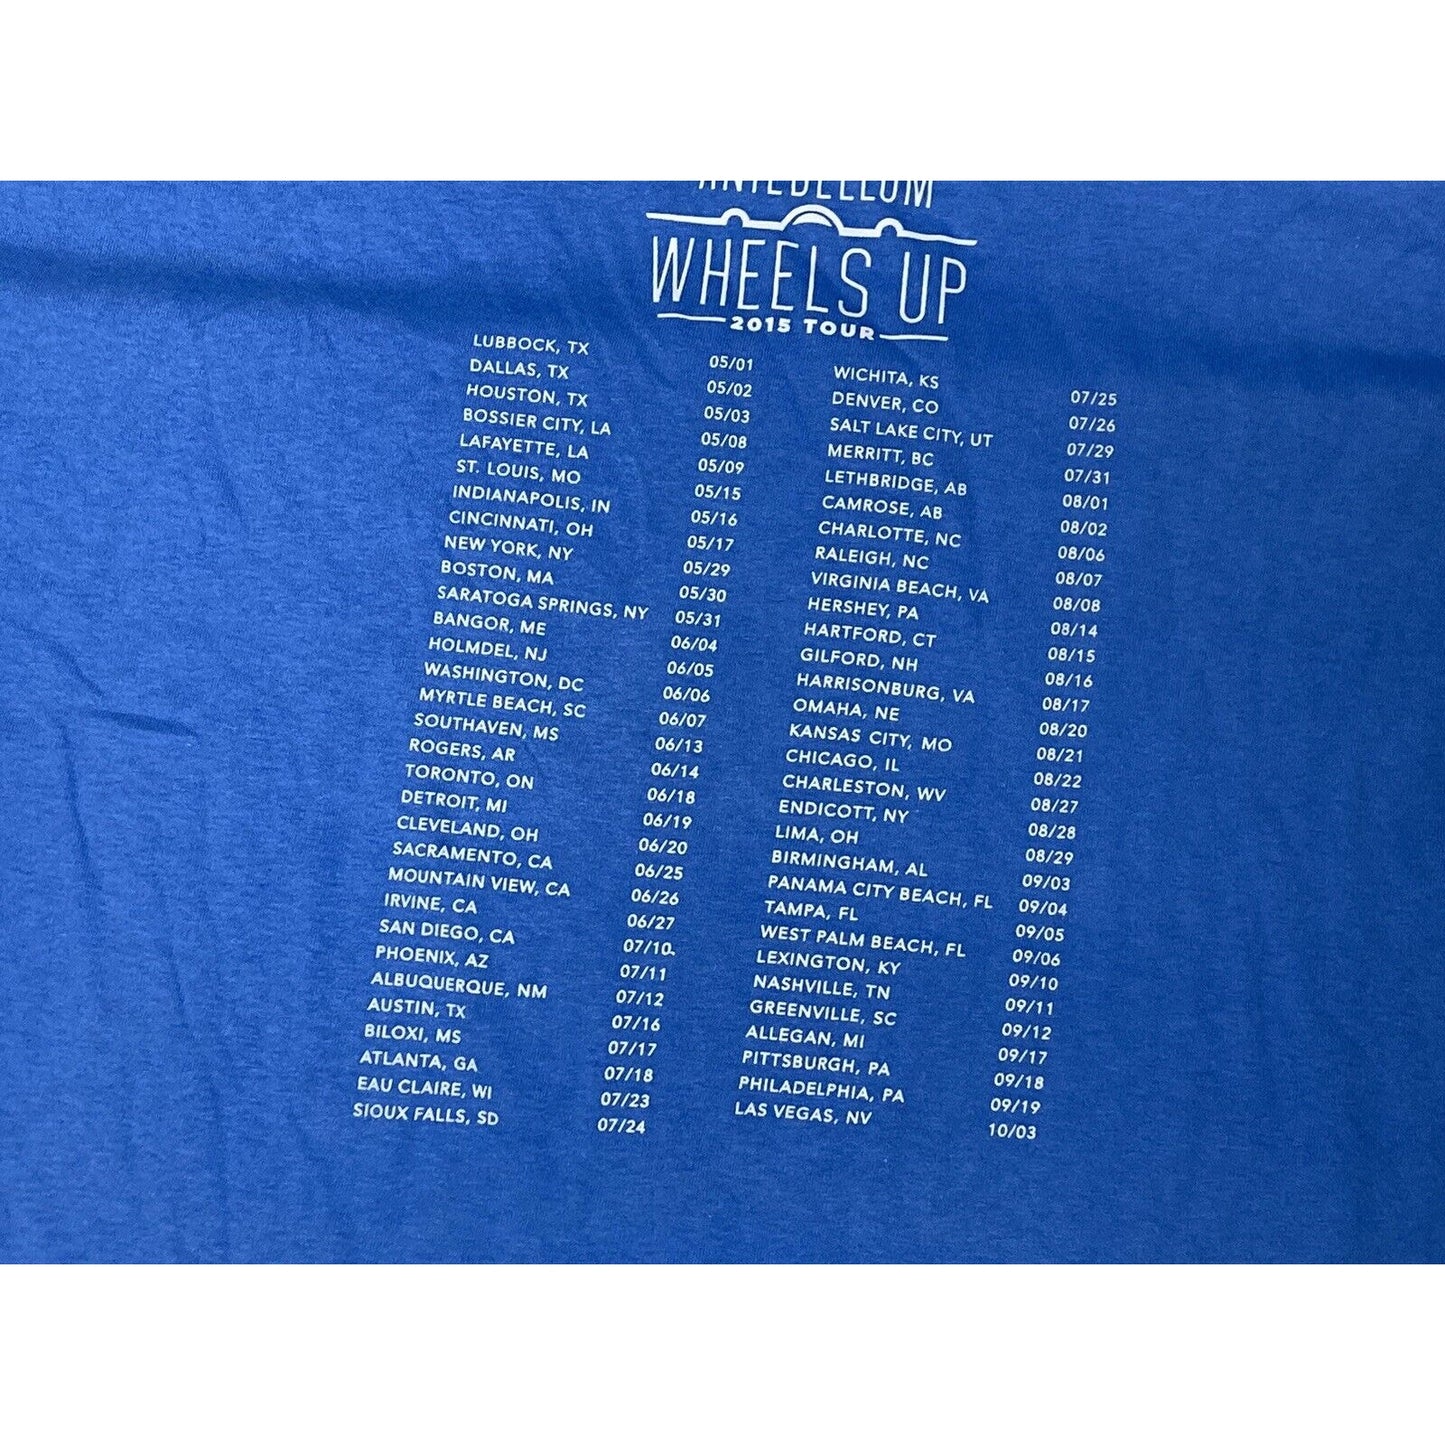 Lady Antebellum Wheels Up 2015 Concert Tour Dates Shirt Blue Has Stains XL